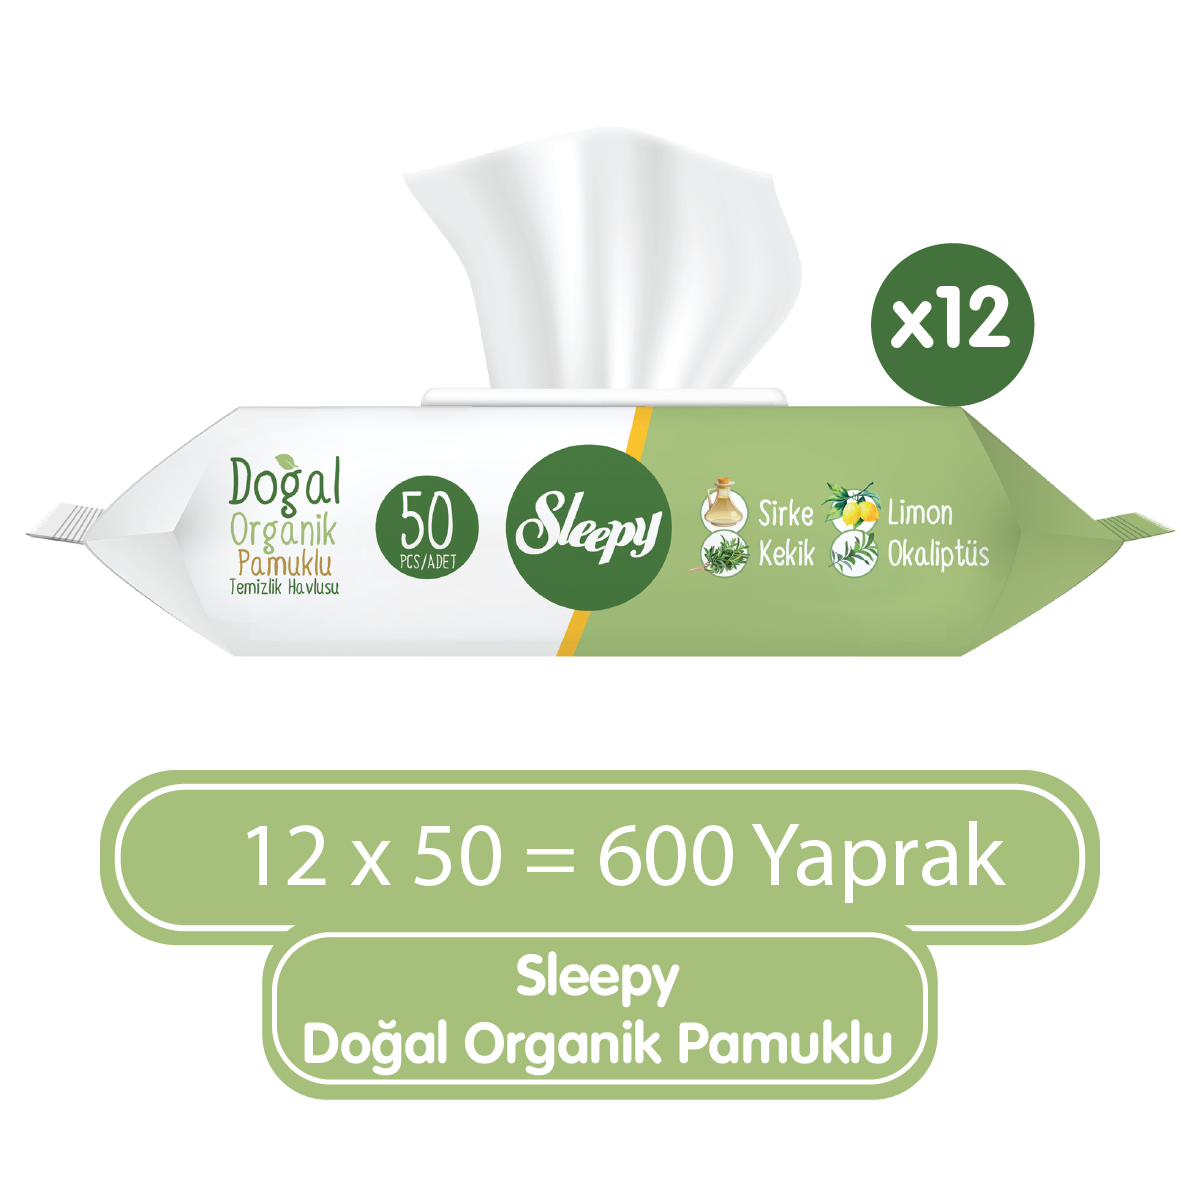 Sleepy Doğal Organik Pamuklu Temizlik Havlusu 12X50